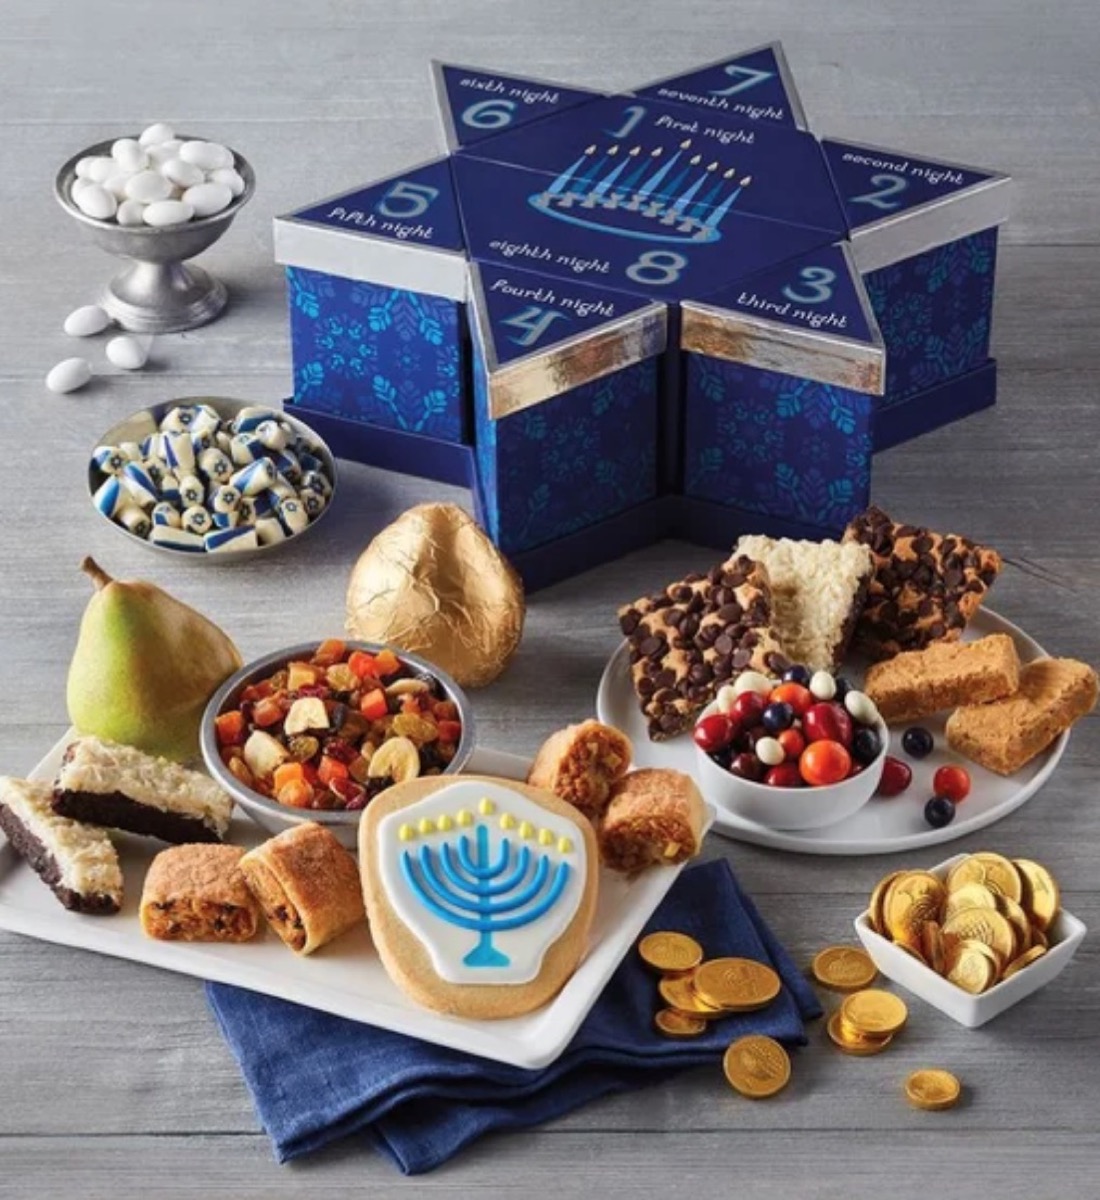 blue star of david box and cookies, hanukkah gifts